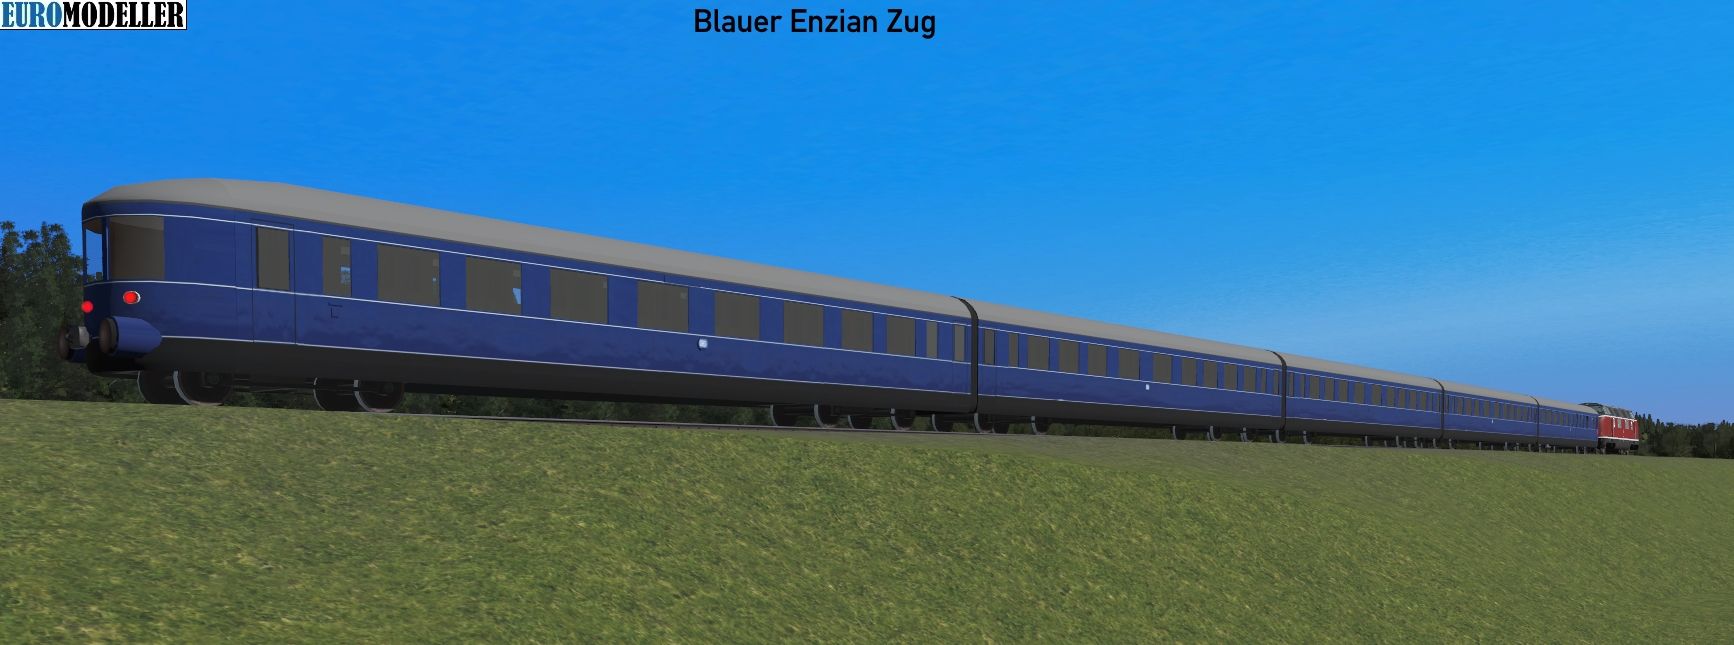 Blauer-Enzian-Zug.jpg